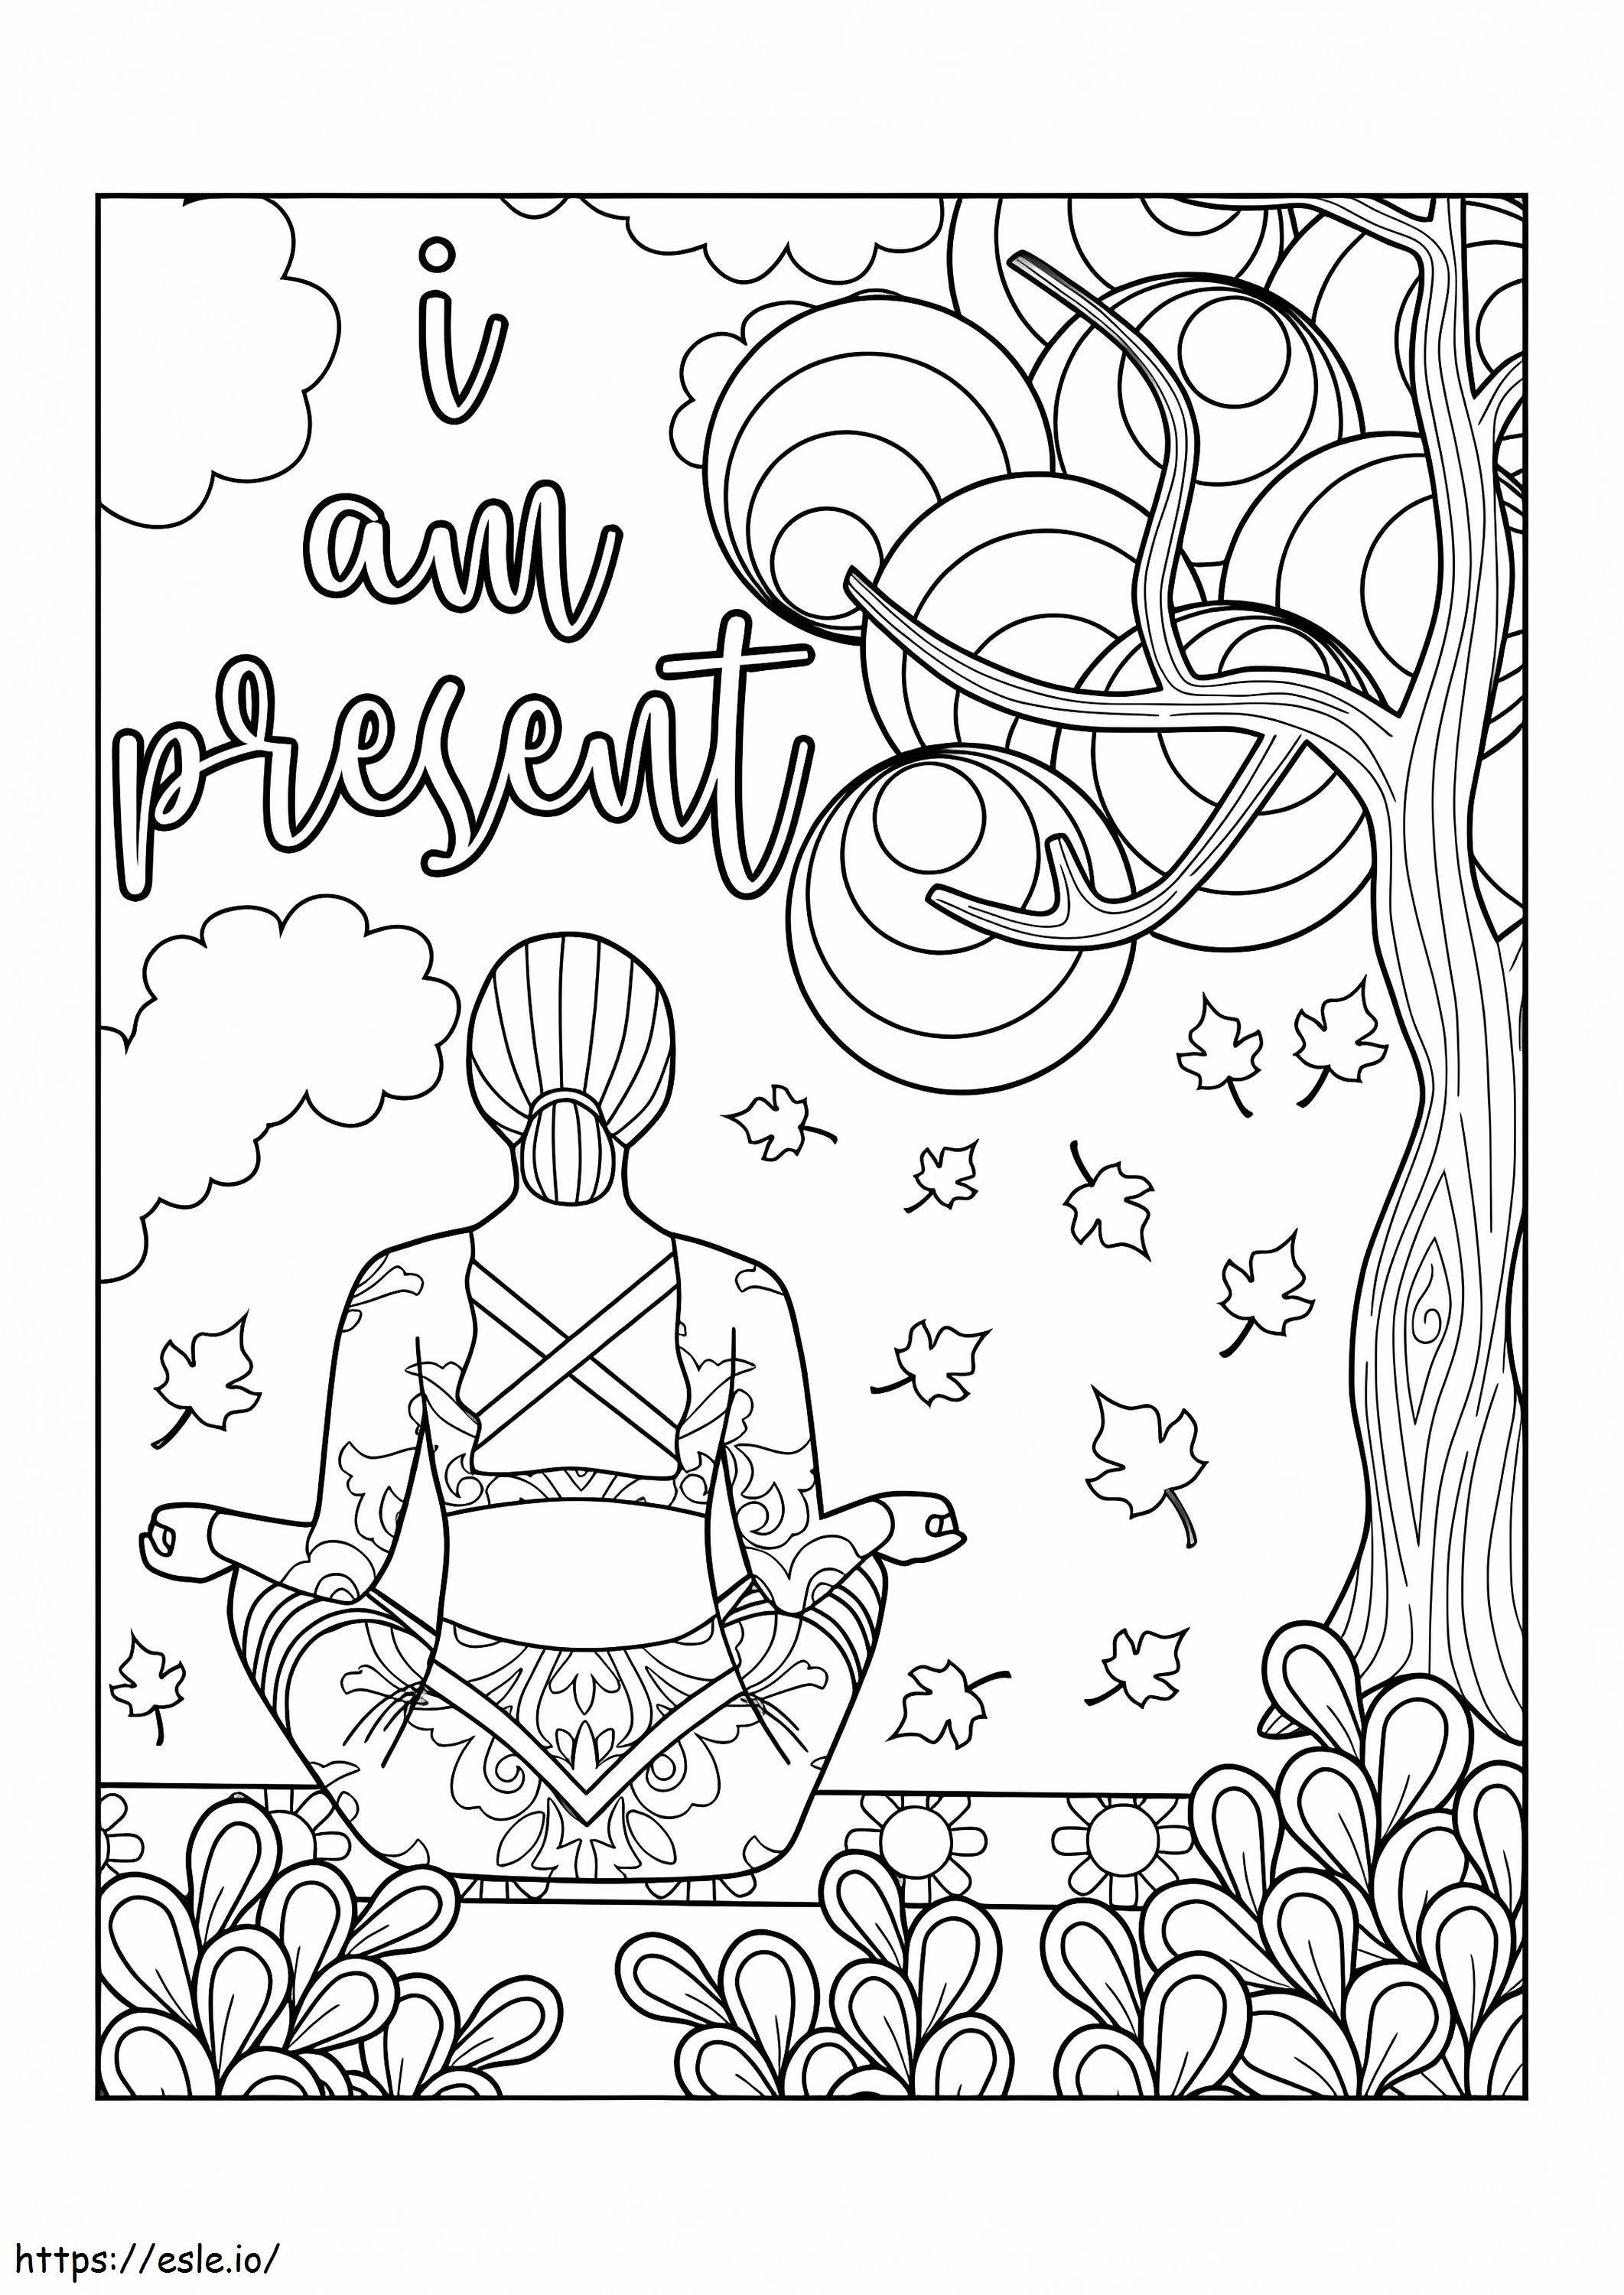 Printable Meditation coloring page